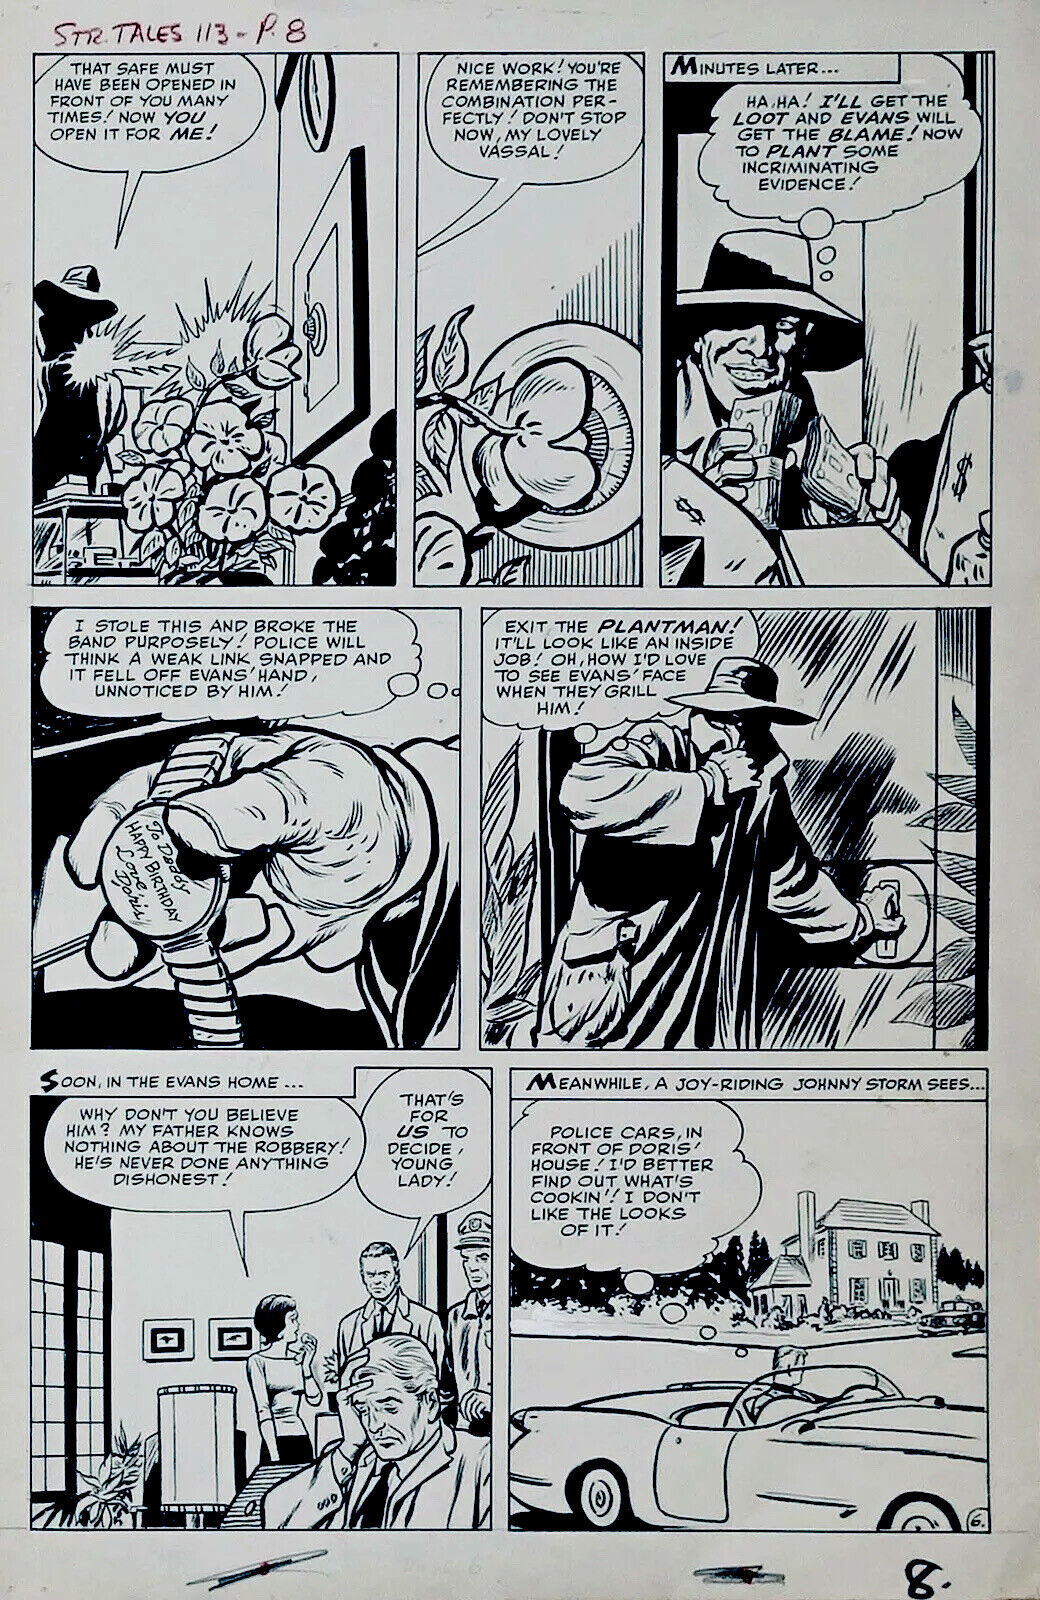 1963 DICK AYERS Strange Tales #113 Original Comic Book Art TWICE UP ART Page #8